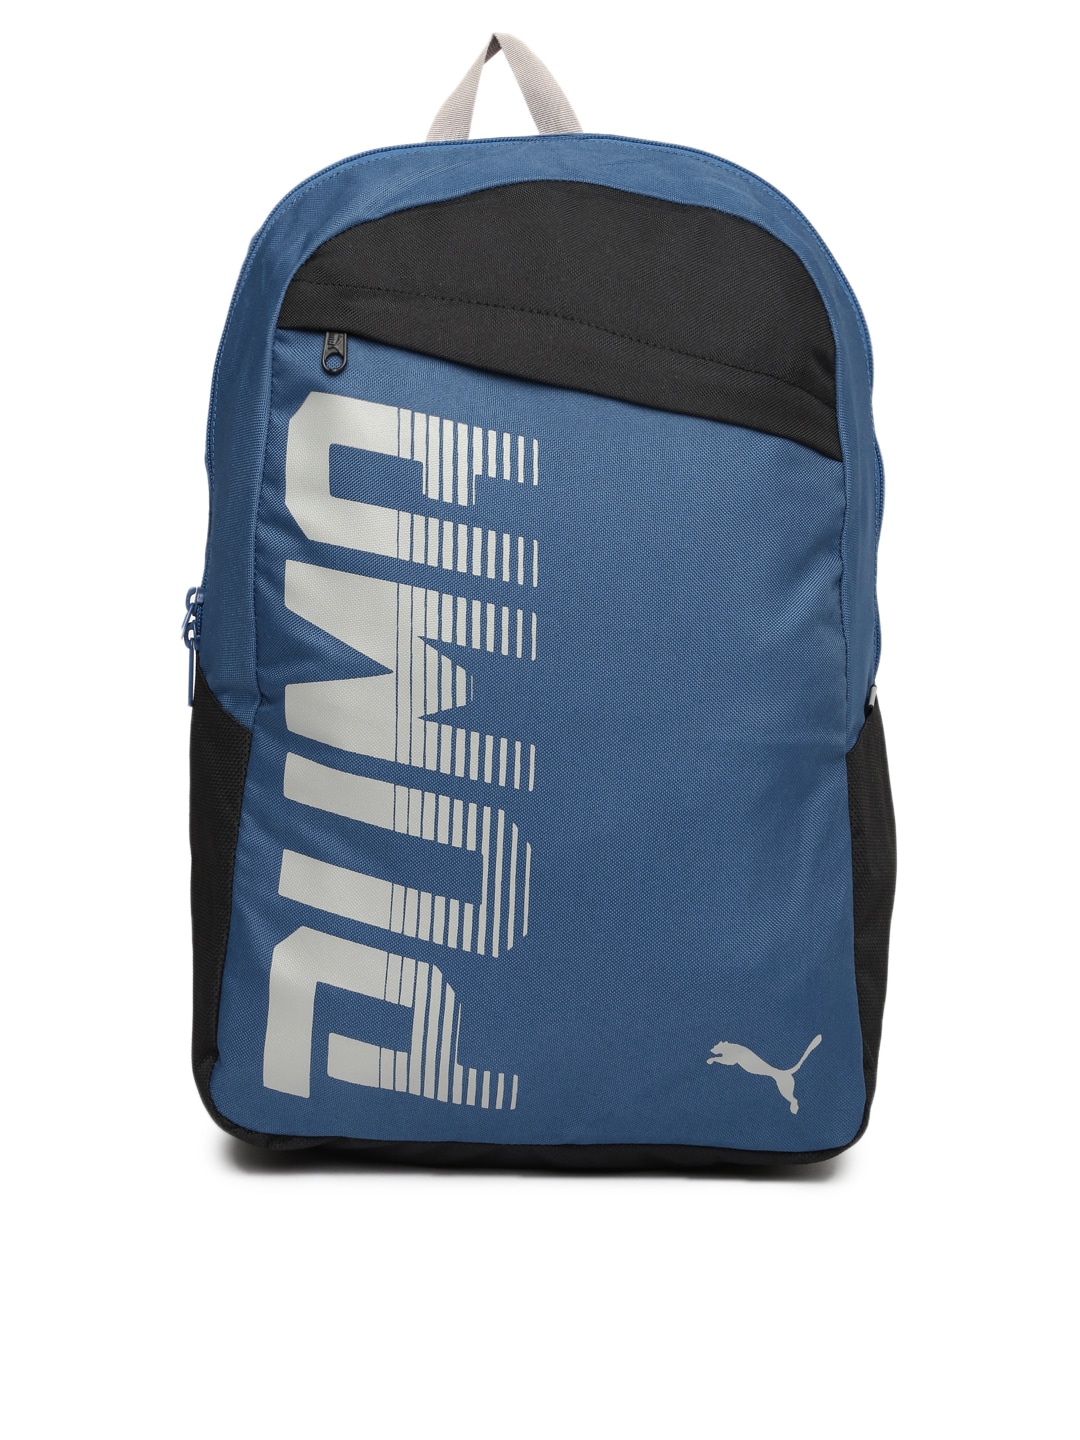 Puma Unisex Blue Pioneer Backpack Price in India